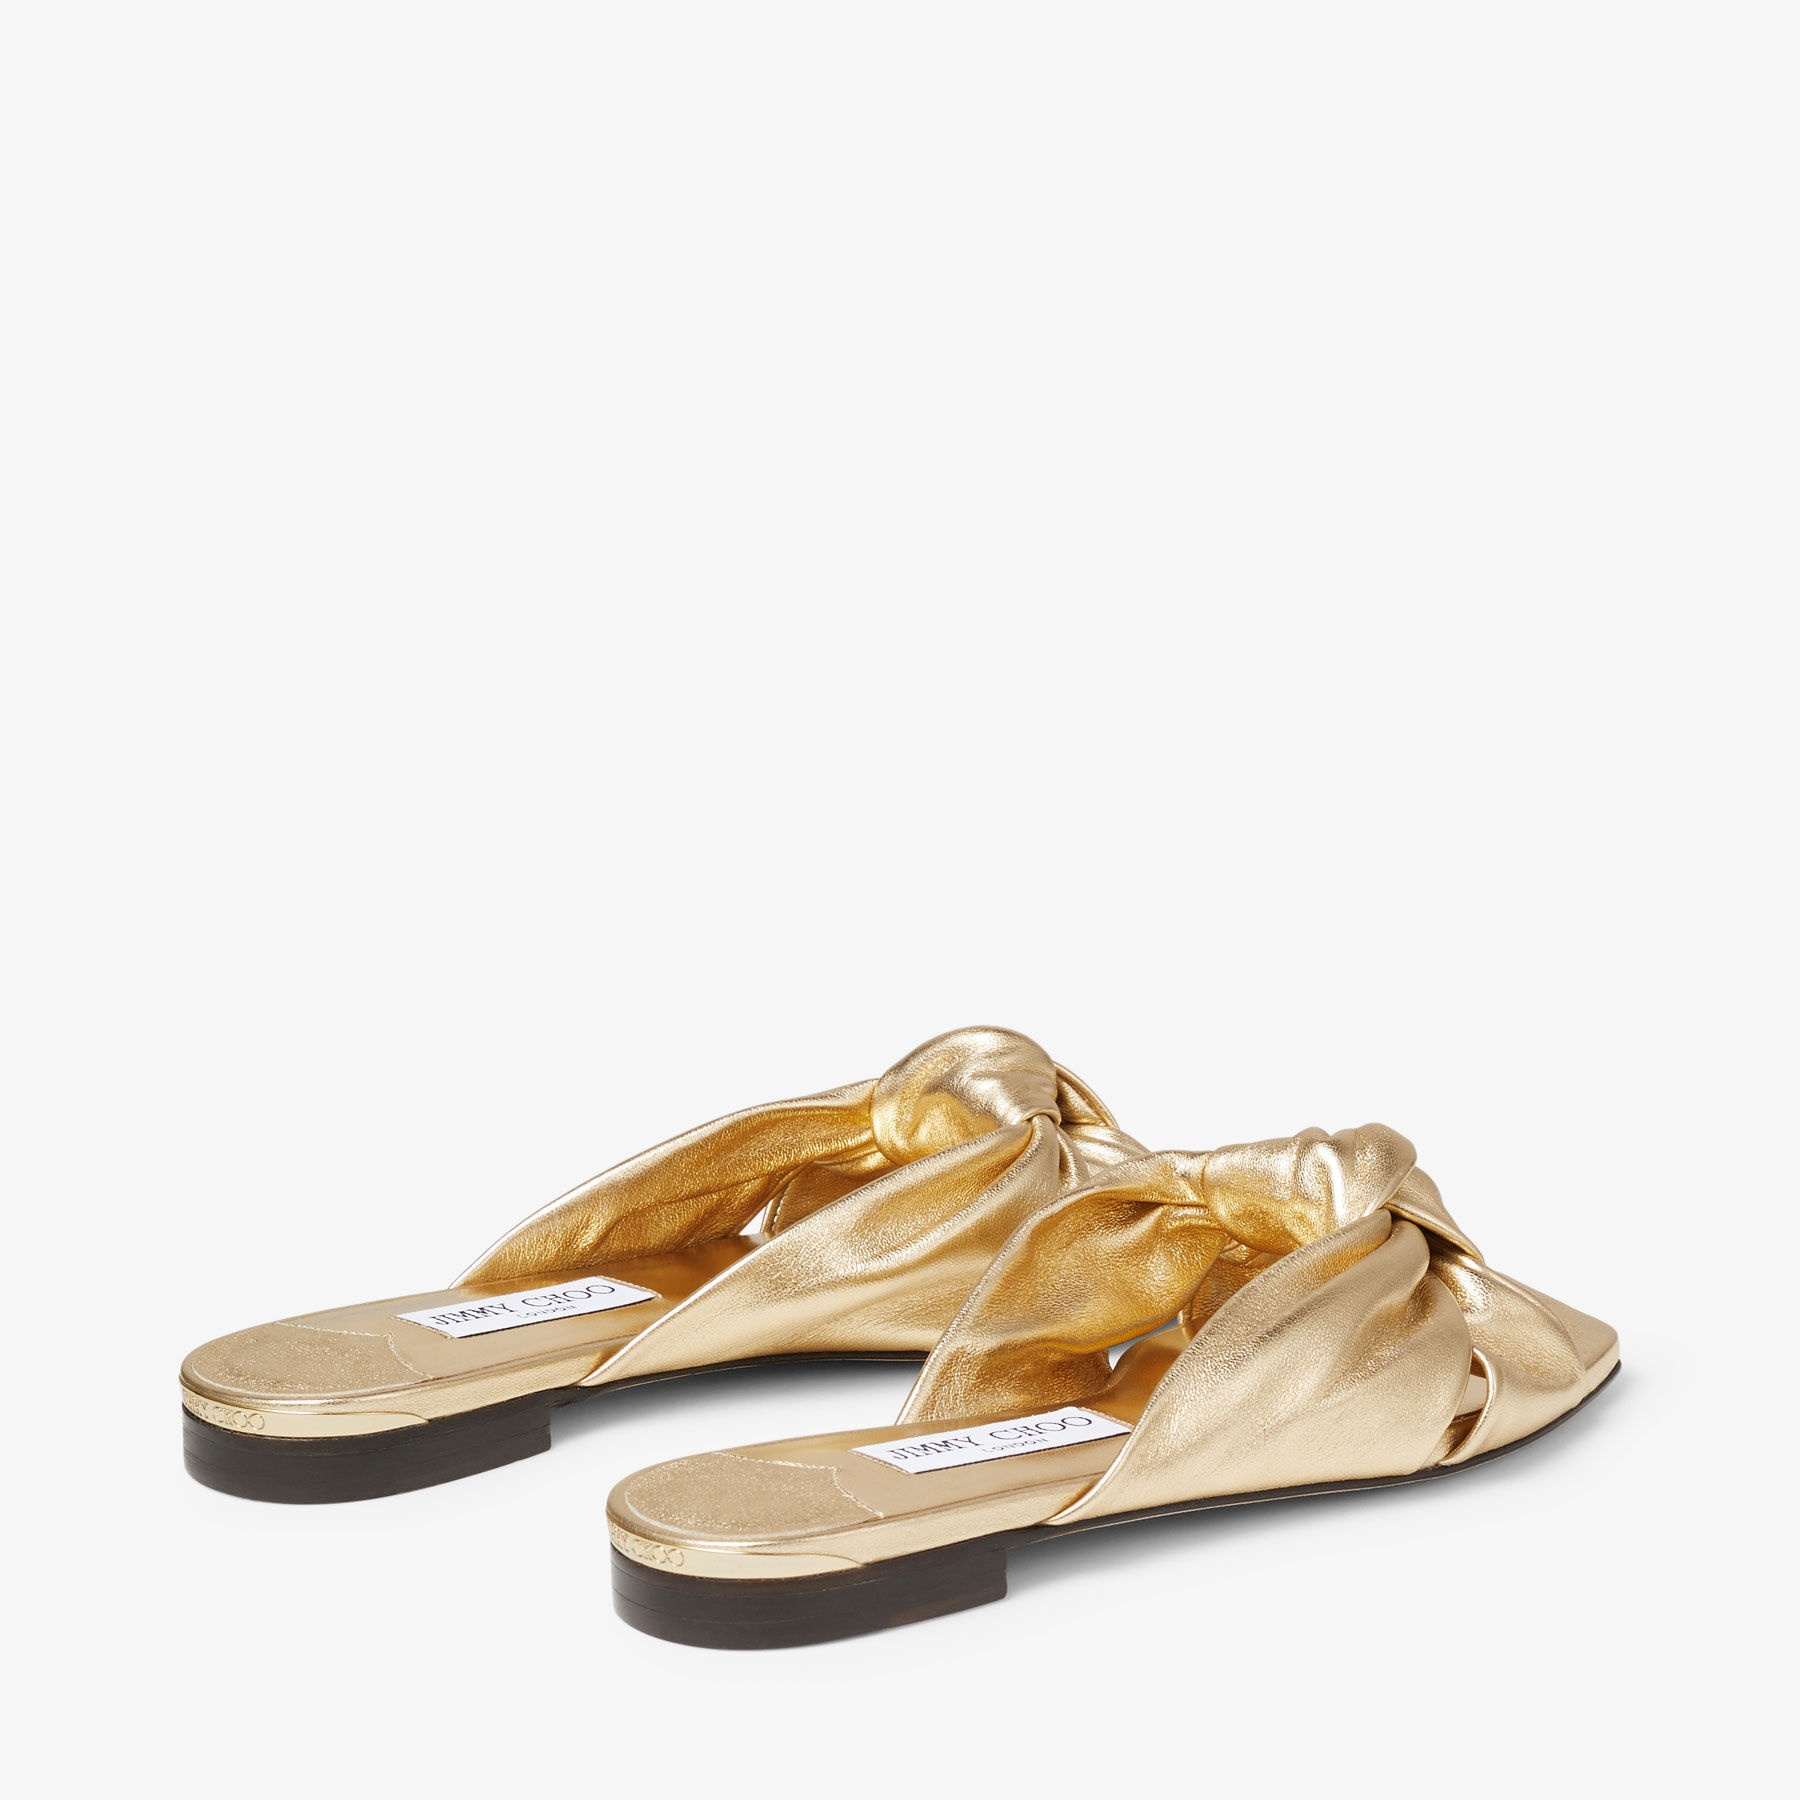 Avenue Flat
Gold Metallic Nappa Leather Flat Sandals - 5